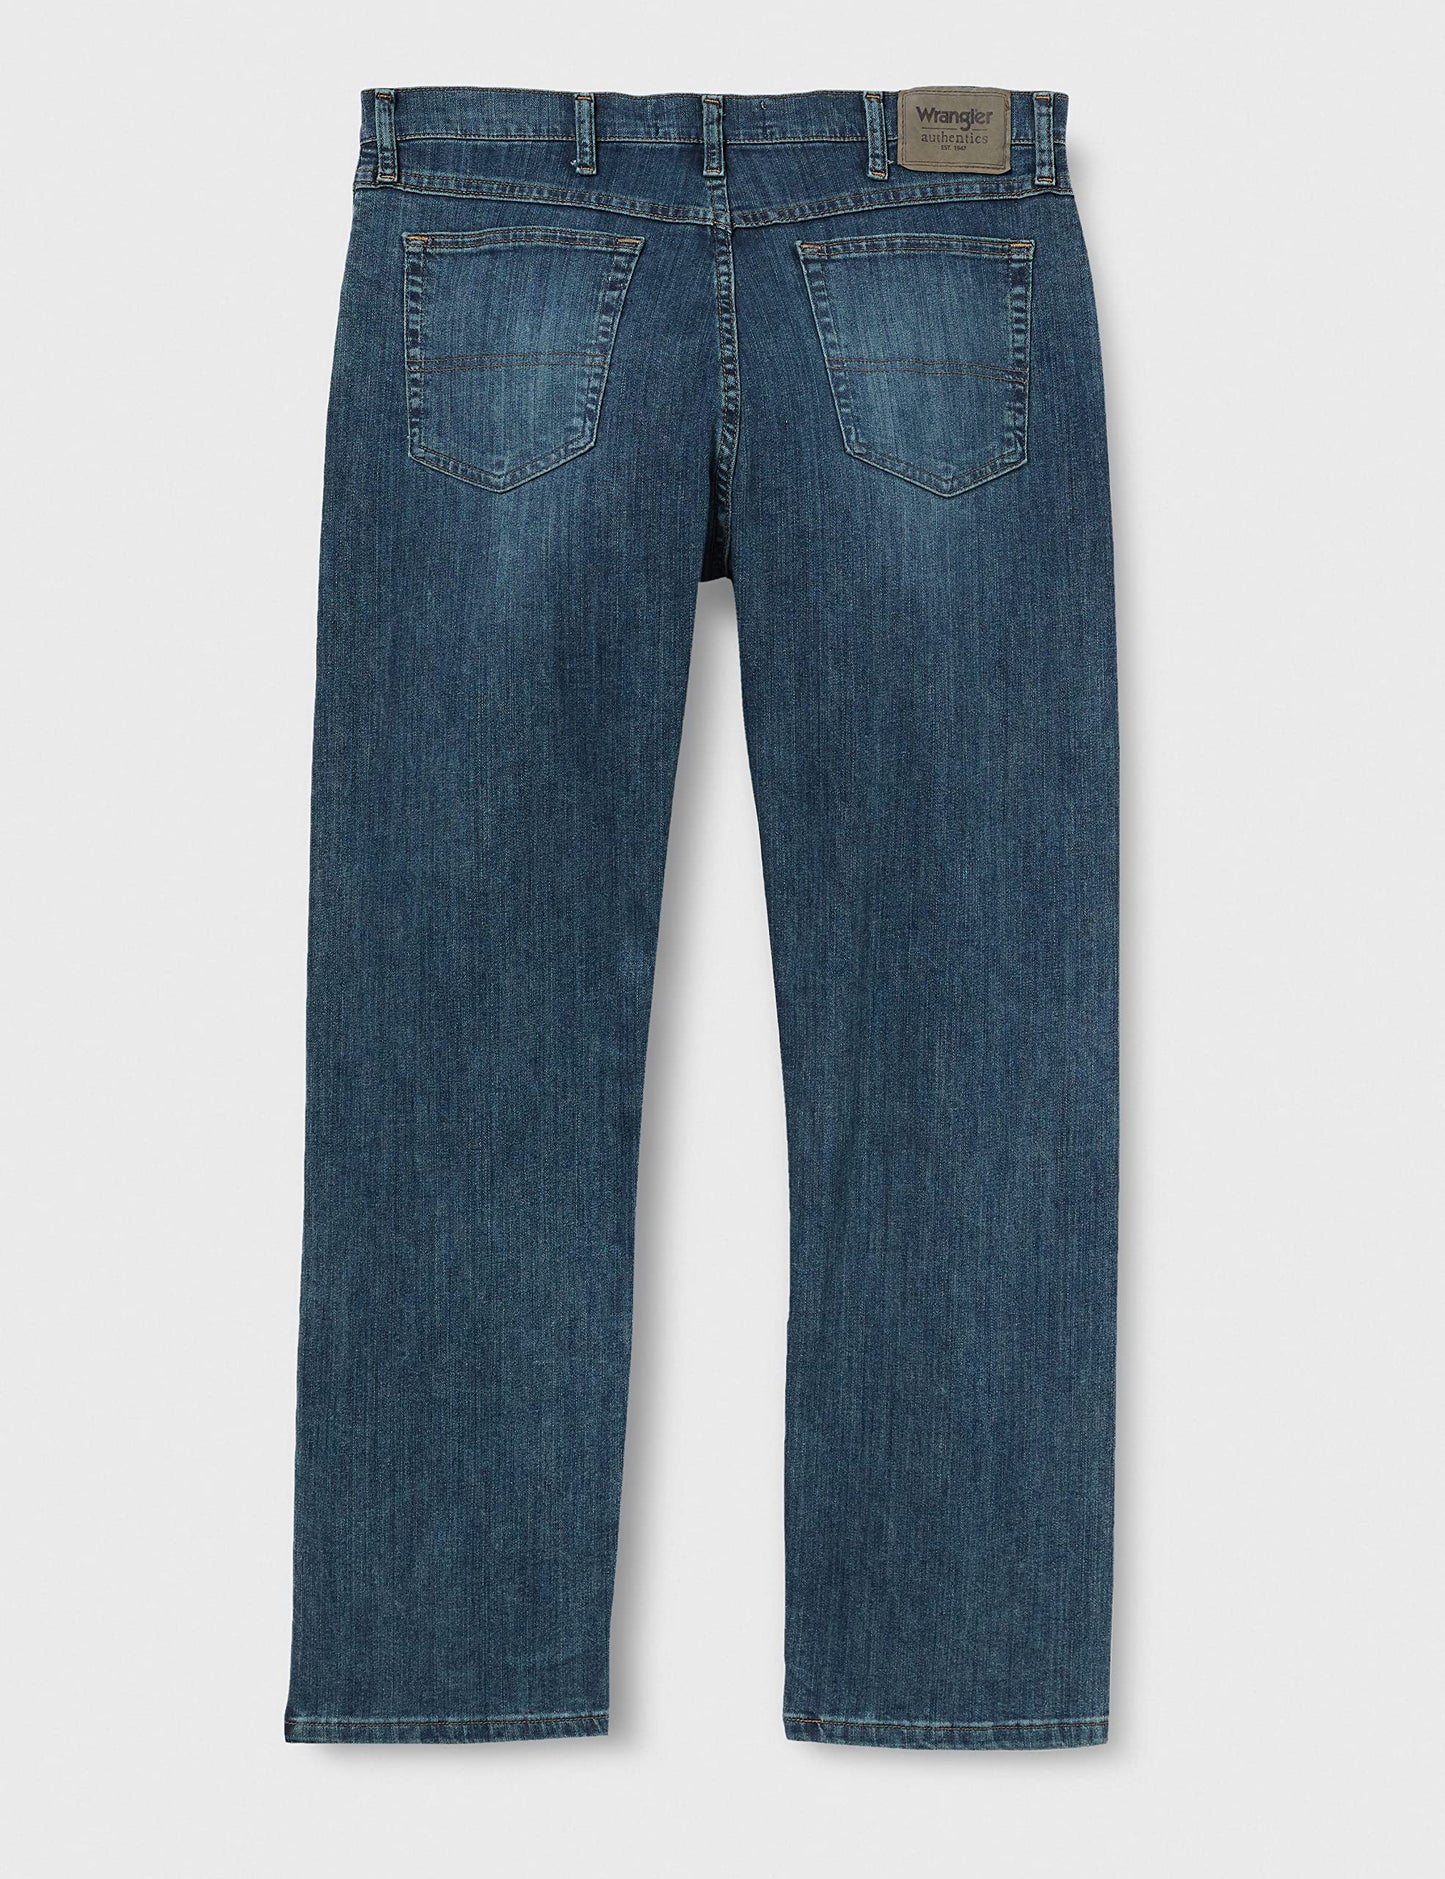 Wrangler Authentics Men's Classic 5-Pocket Regular Fit Jean, Twilight Flex, 38W x 31L